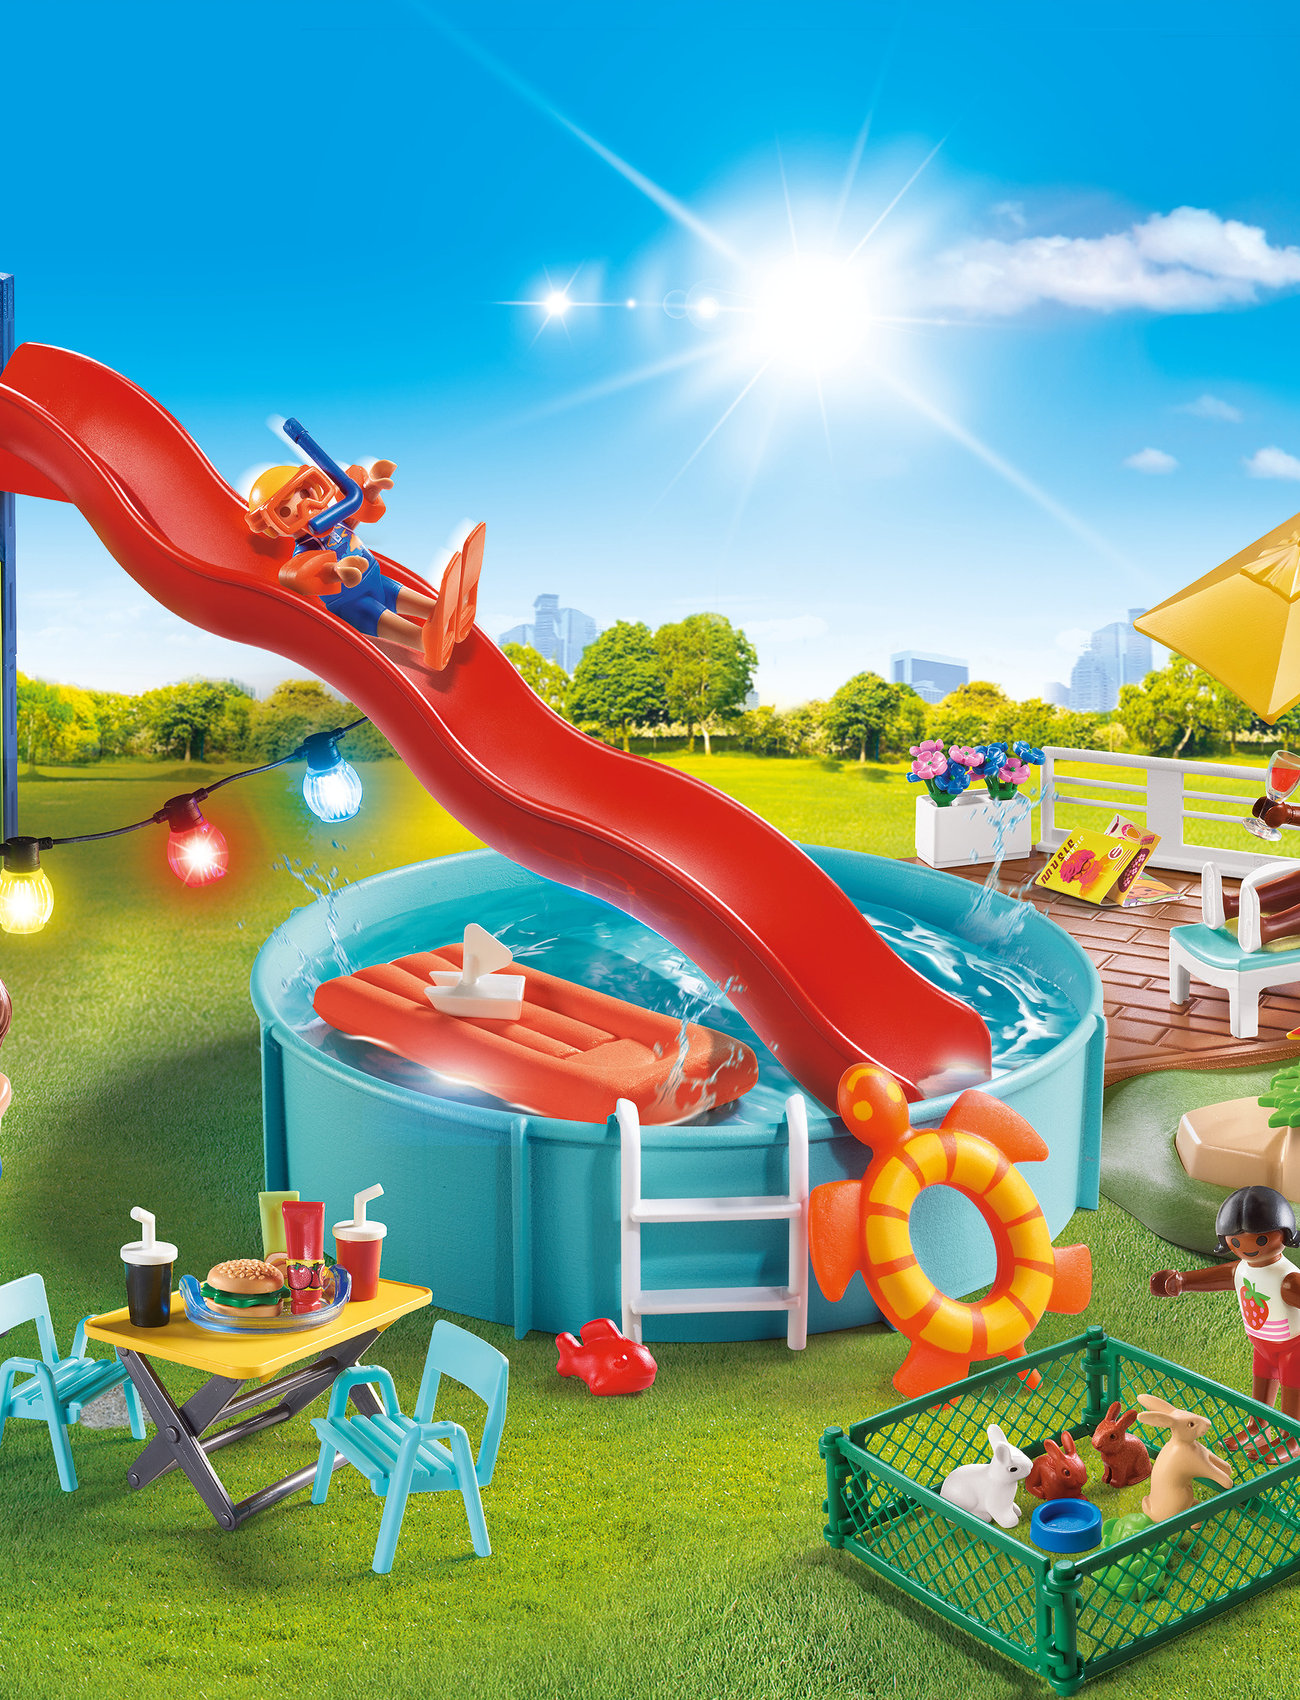 PLAYMOBIL - PLAYMOBIL City Life Pool Party - 70987 - playmobil city life - multicolored - 1